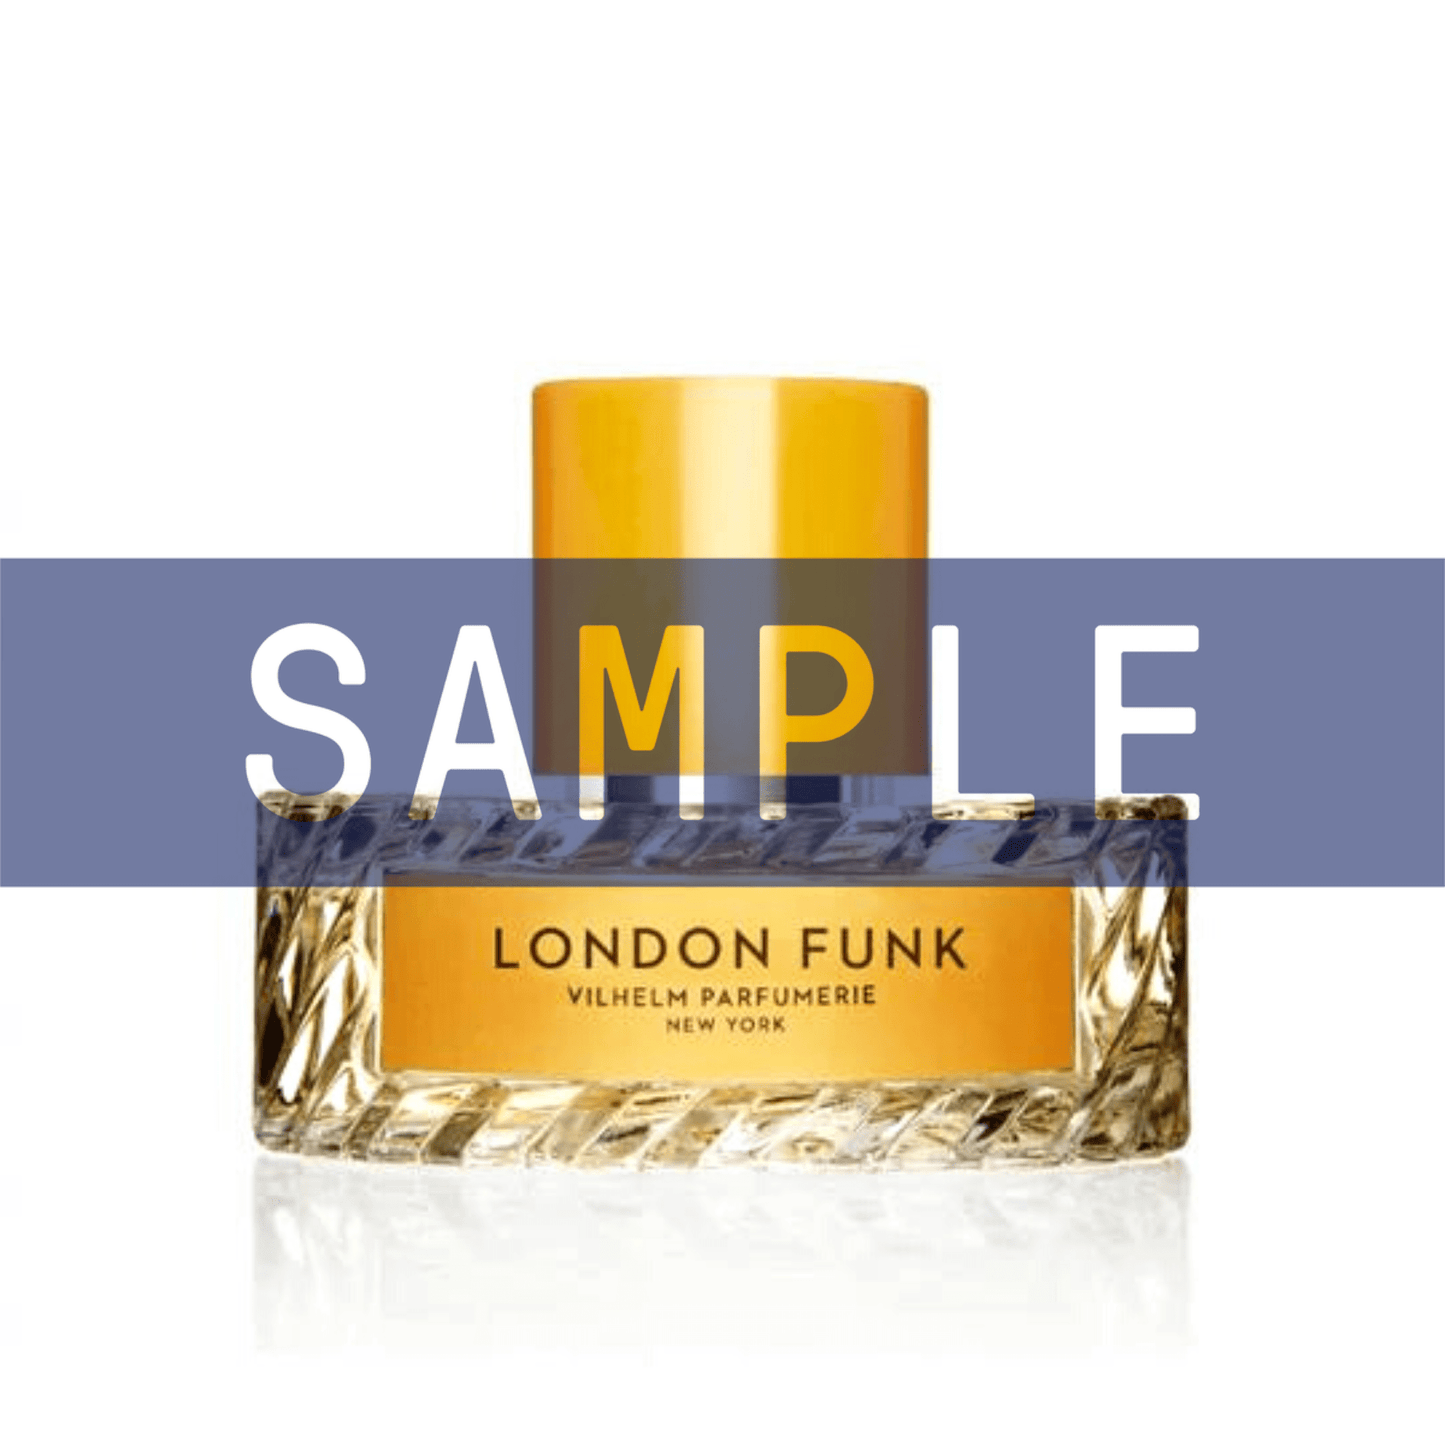 Primary Image of Sample - London Funk EDP